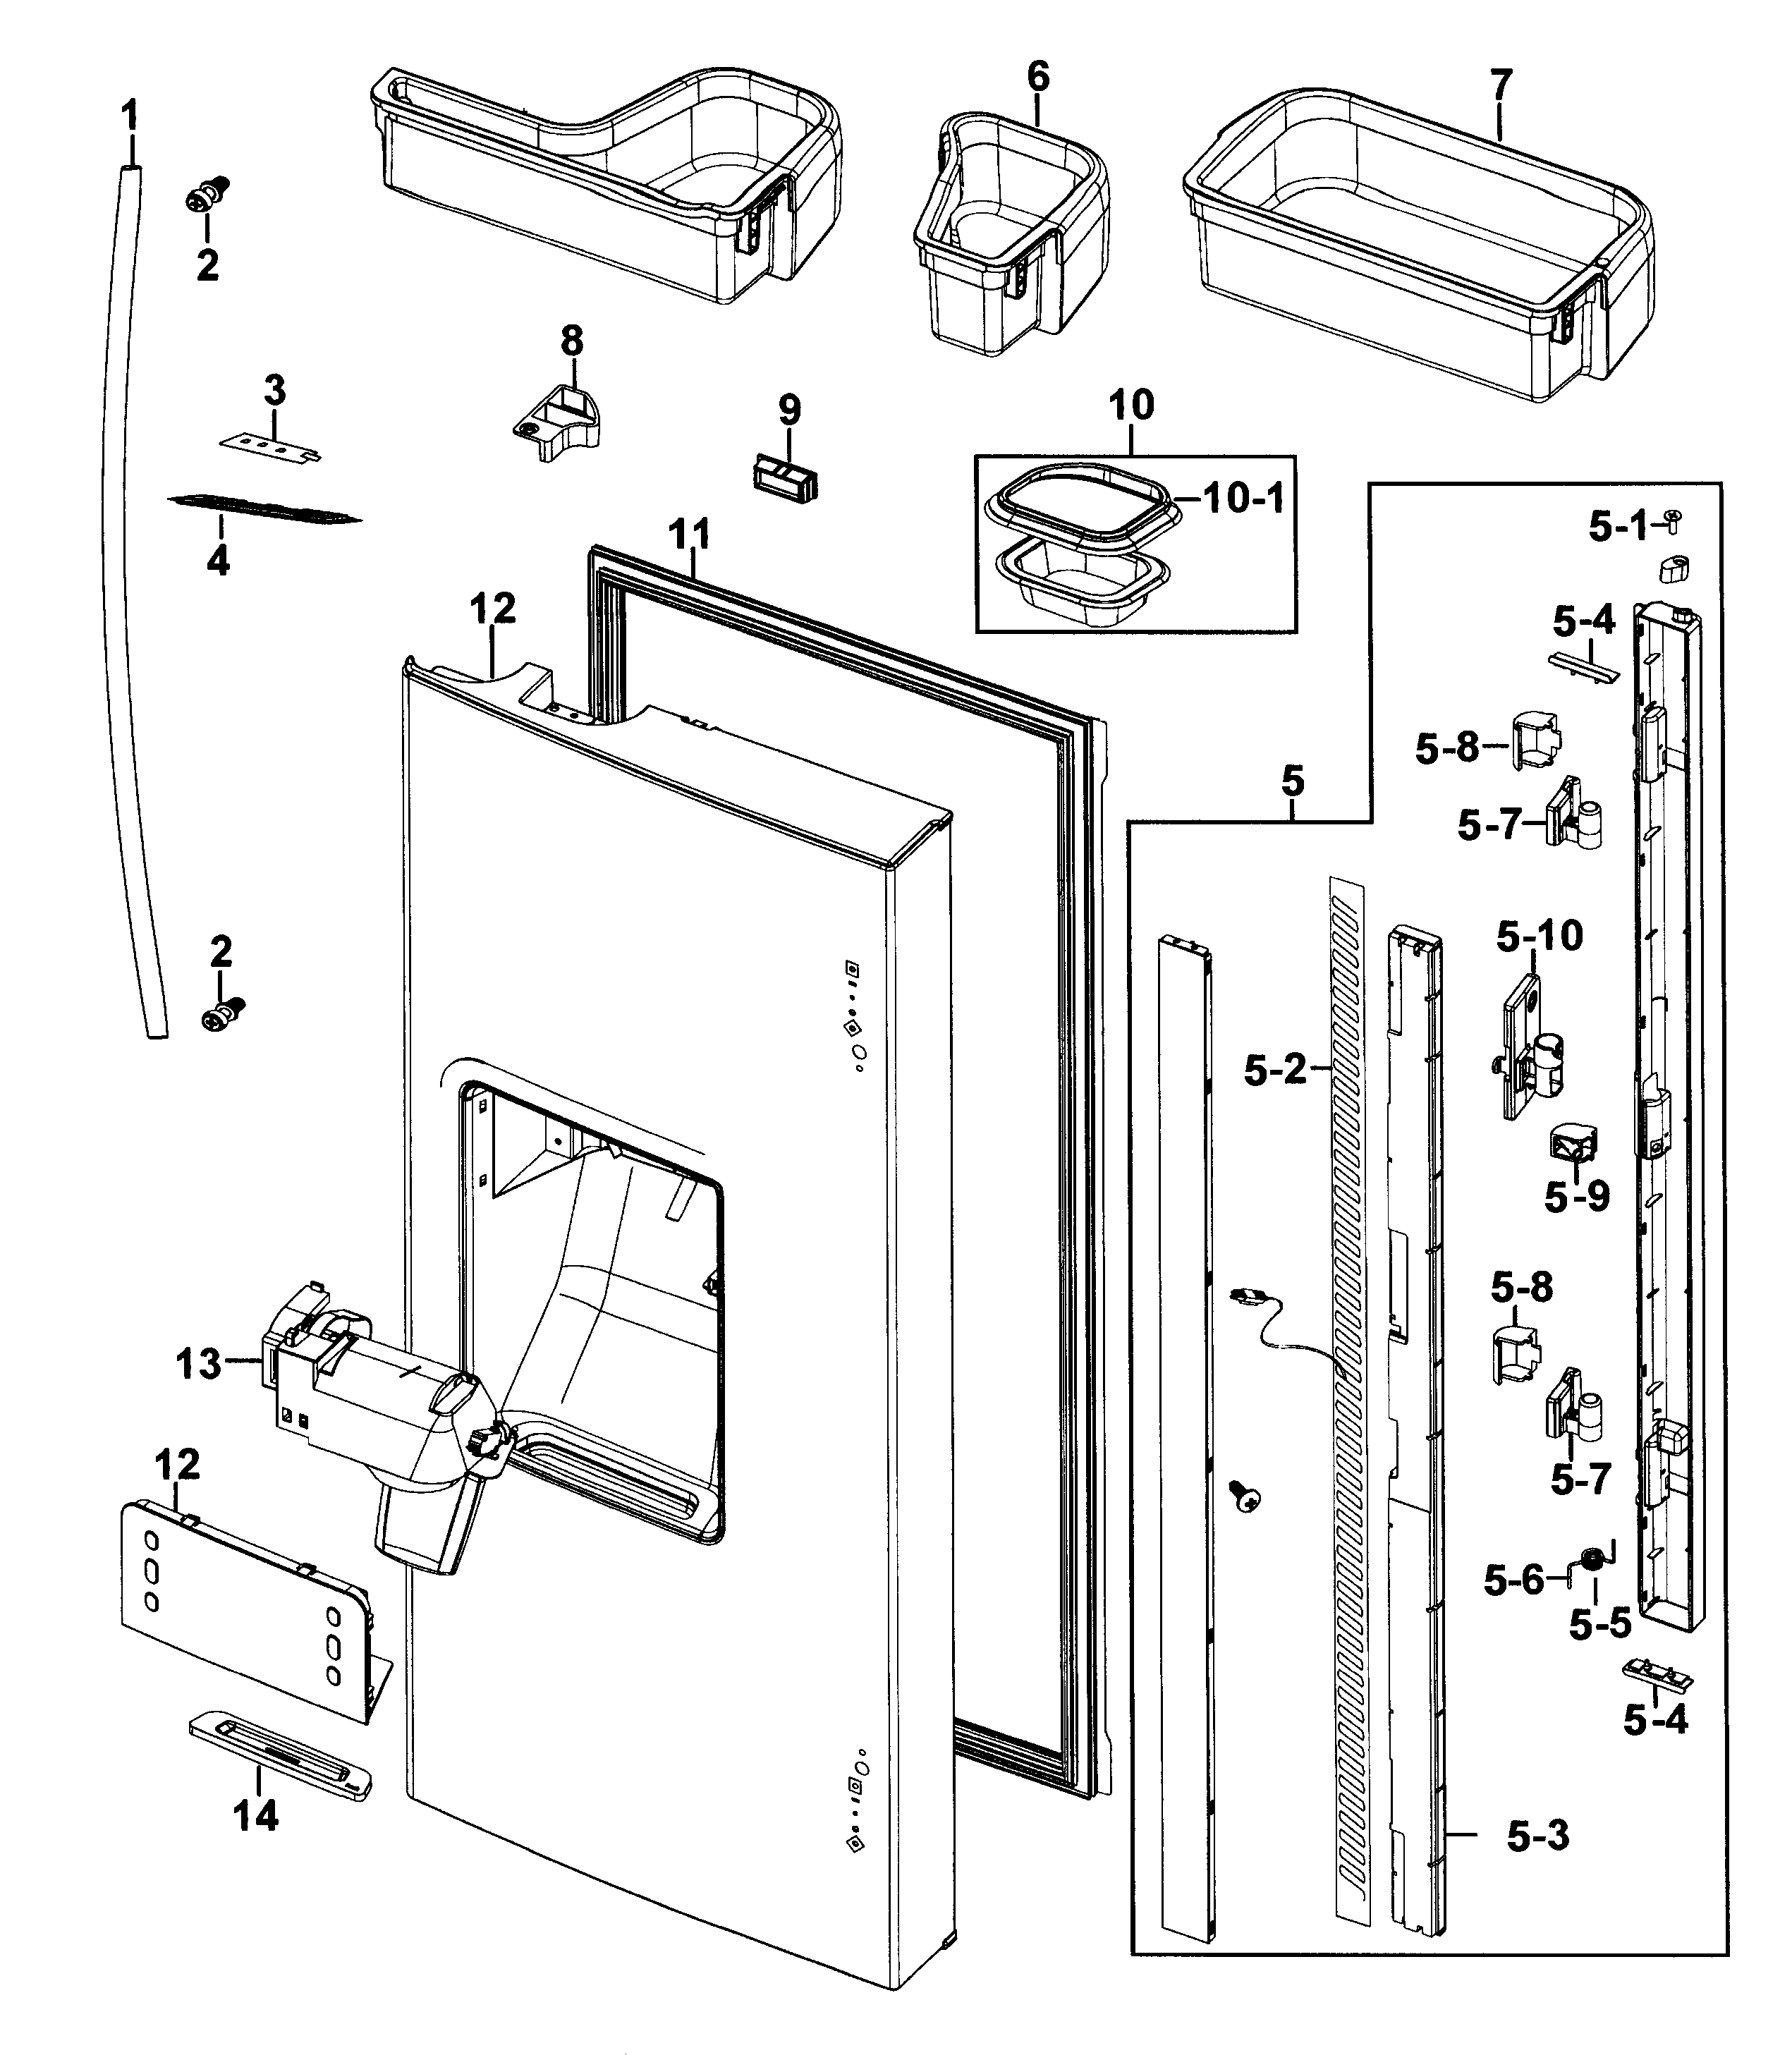 Whirlpool Refrigerator Parts Diagram Samsung Refrigerator Parts Diagram Wiring Diagram Library